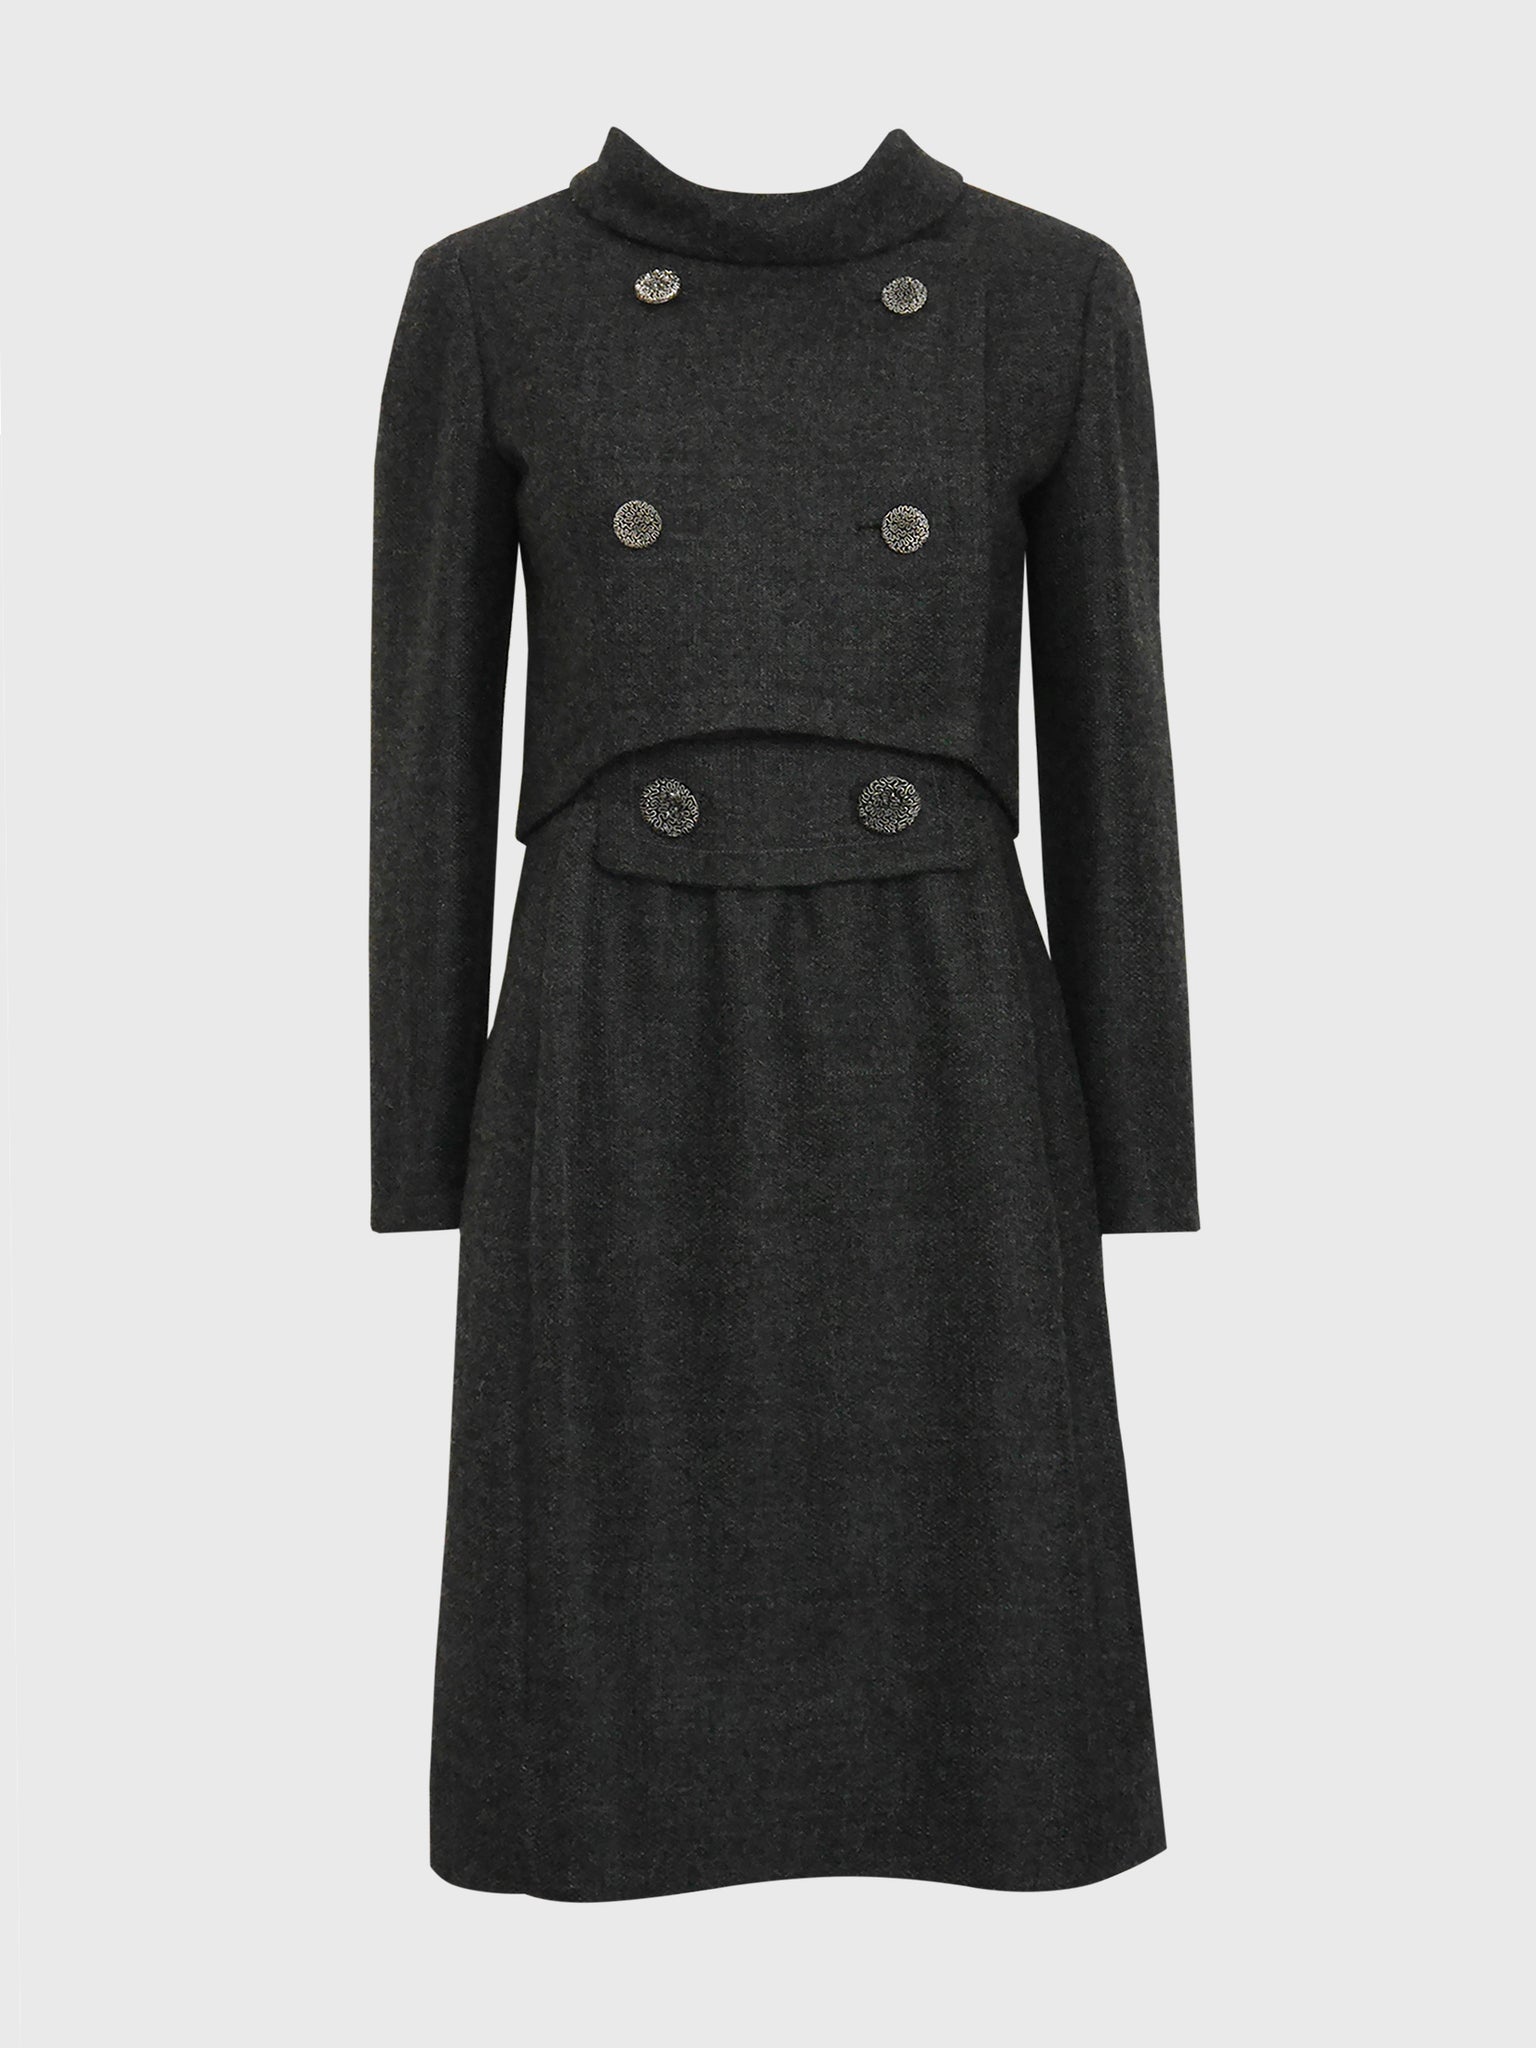 NINA RICCI c. 1960 Vintage Dress & Jacket Day Suit Grey Wool